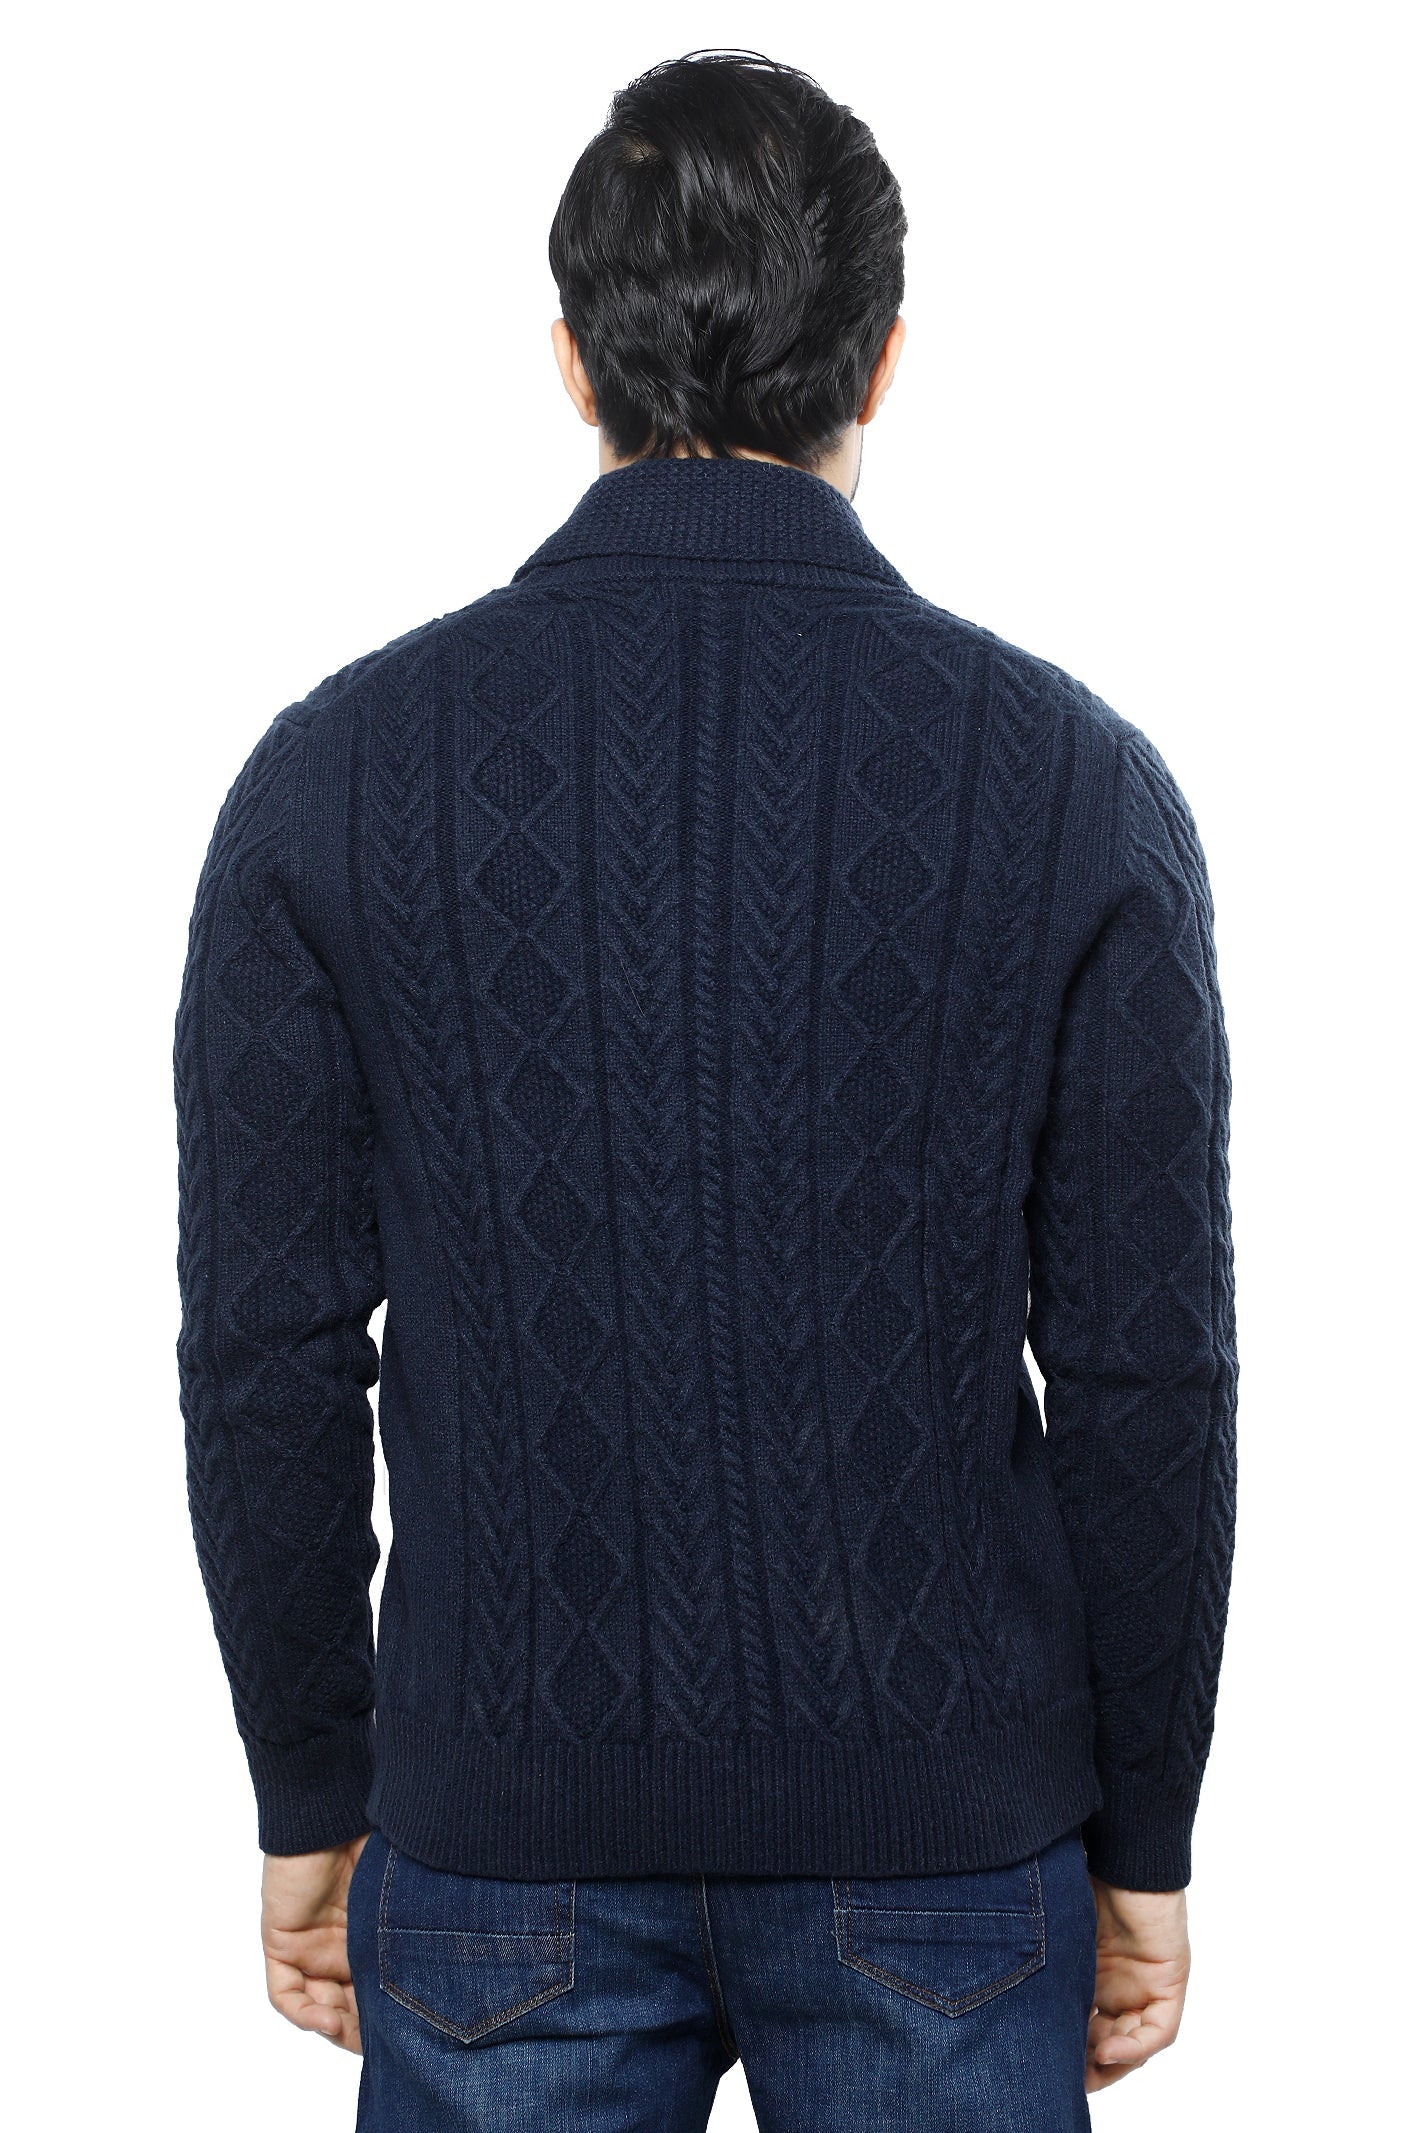 Gents Sweater SKU: SA596-D-BLUE - Diners